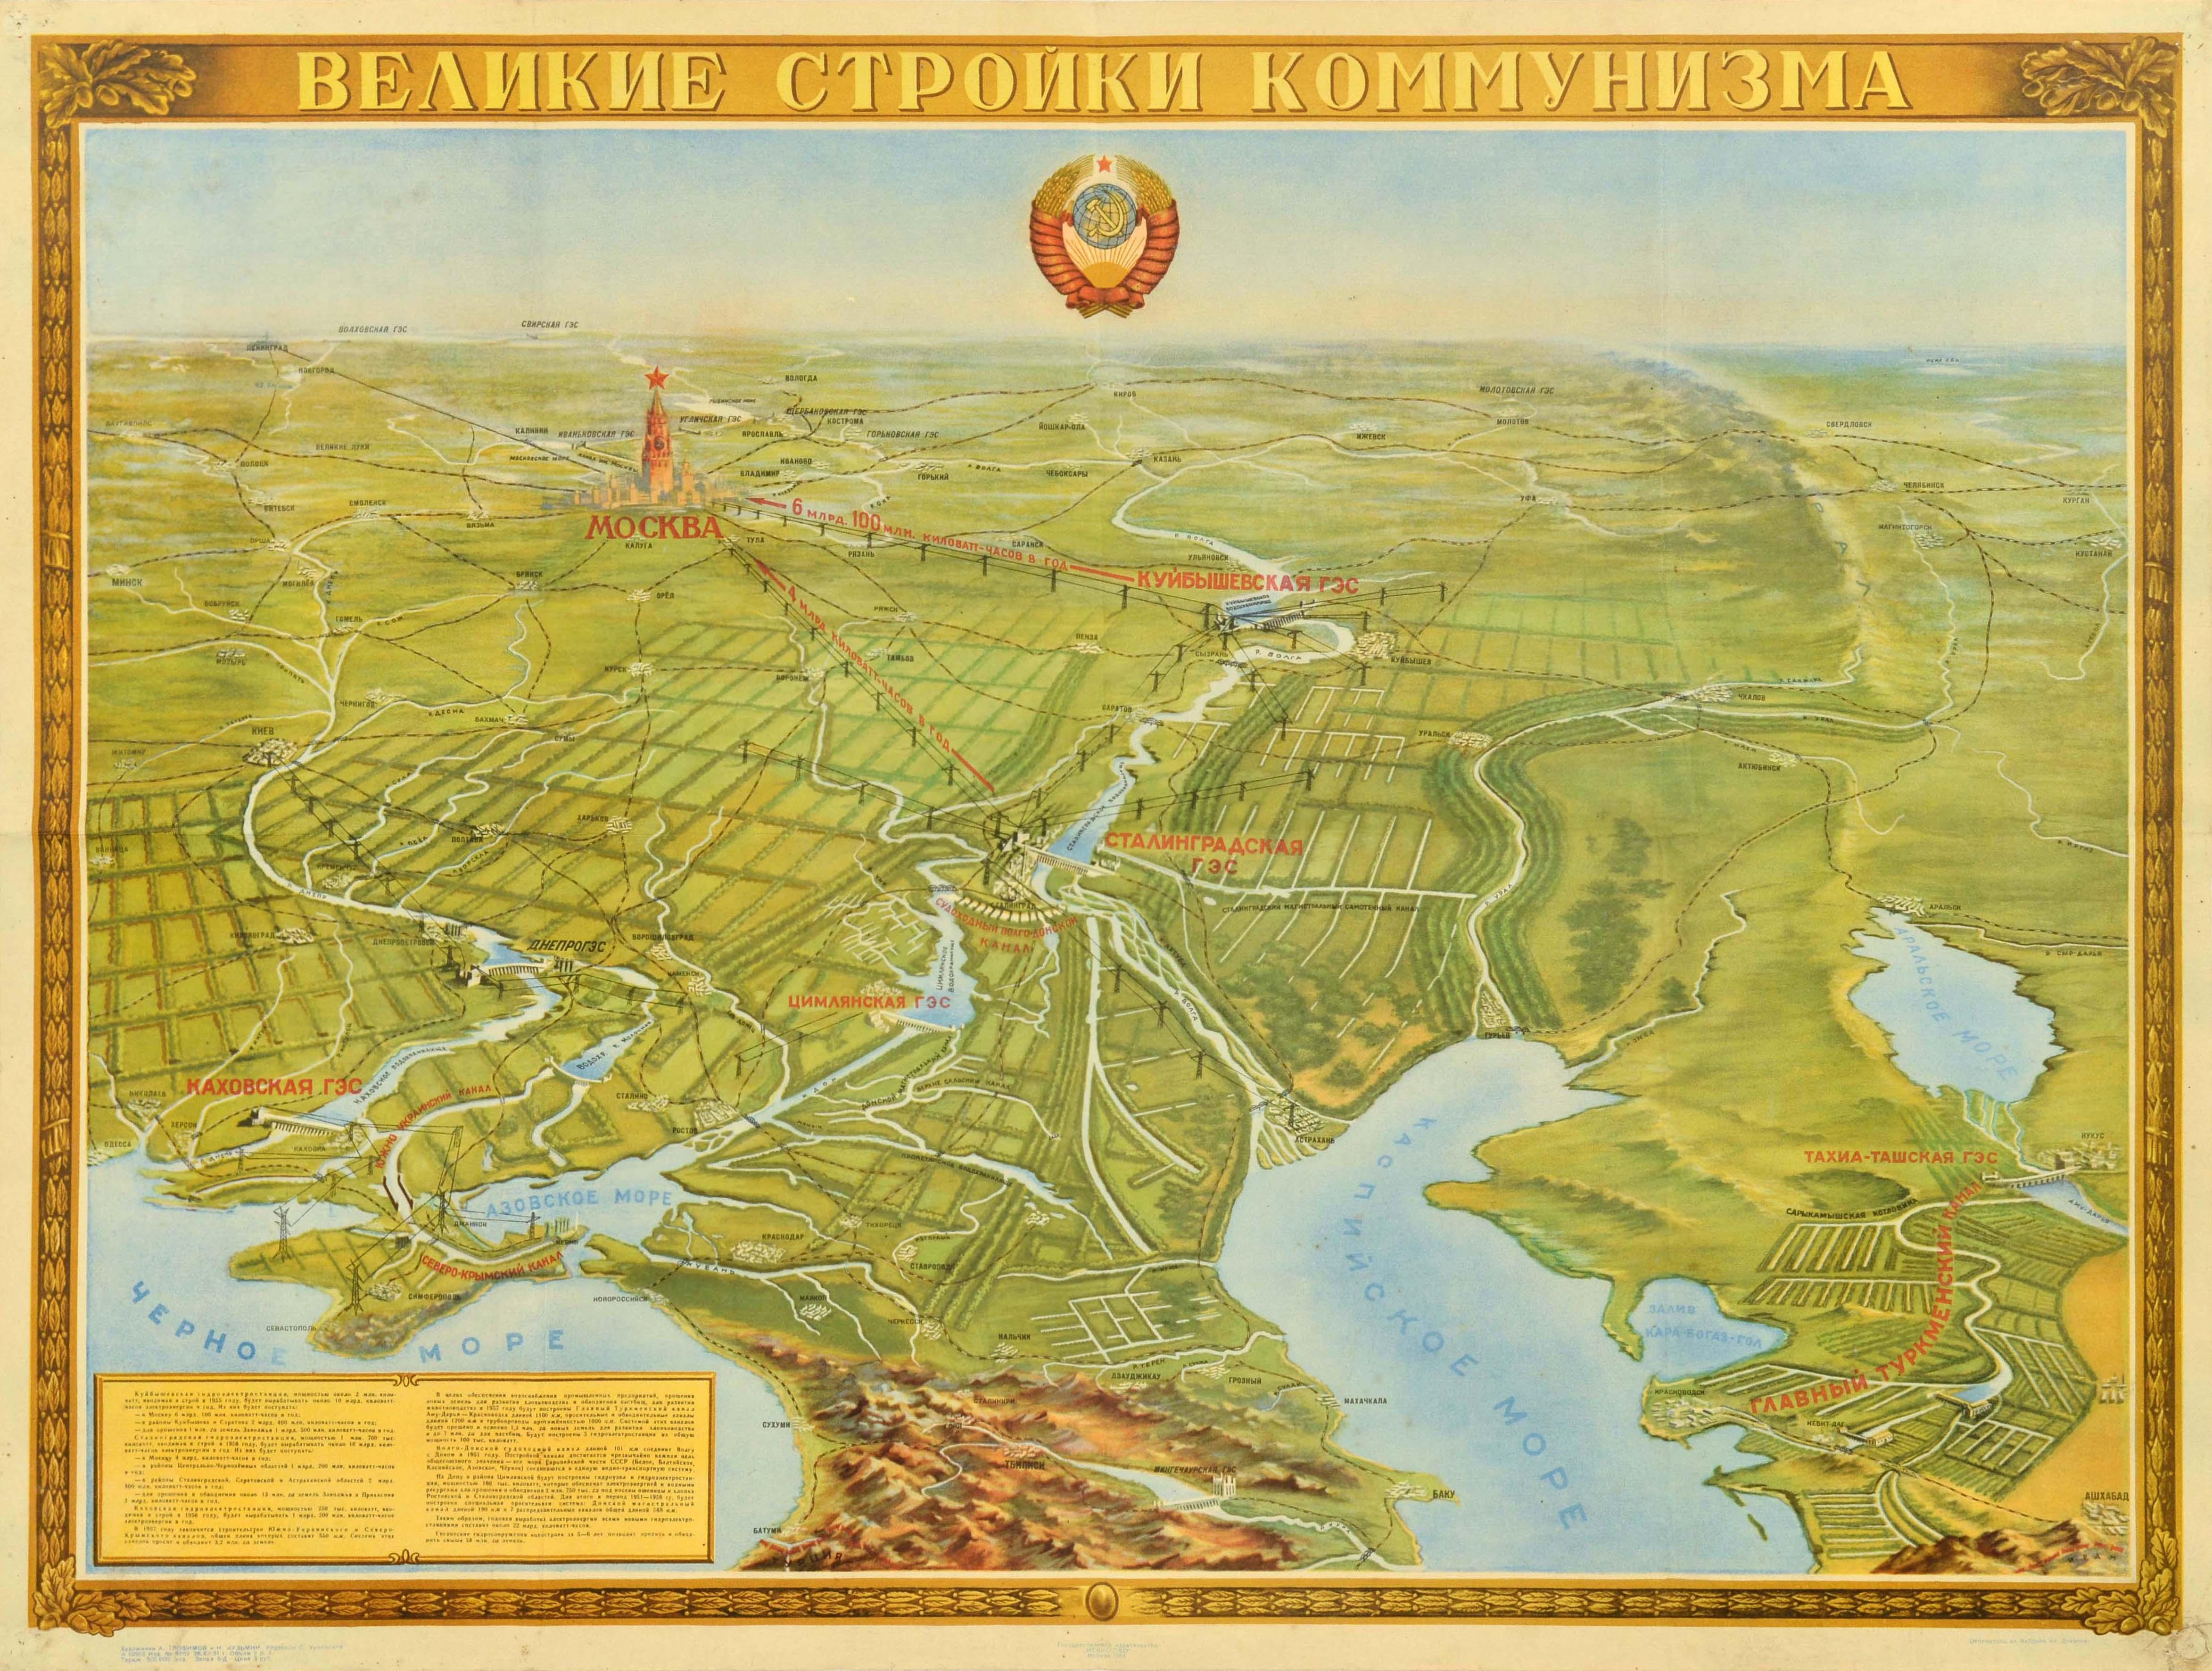 Unknown Print - Original Vintage Soviet Propaganda Poster Great Buildings Of Communism Map USSR